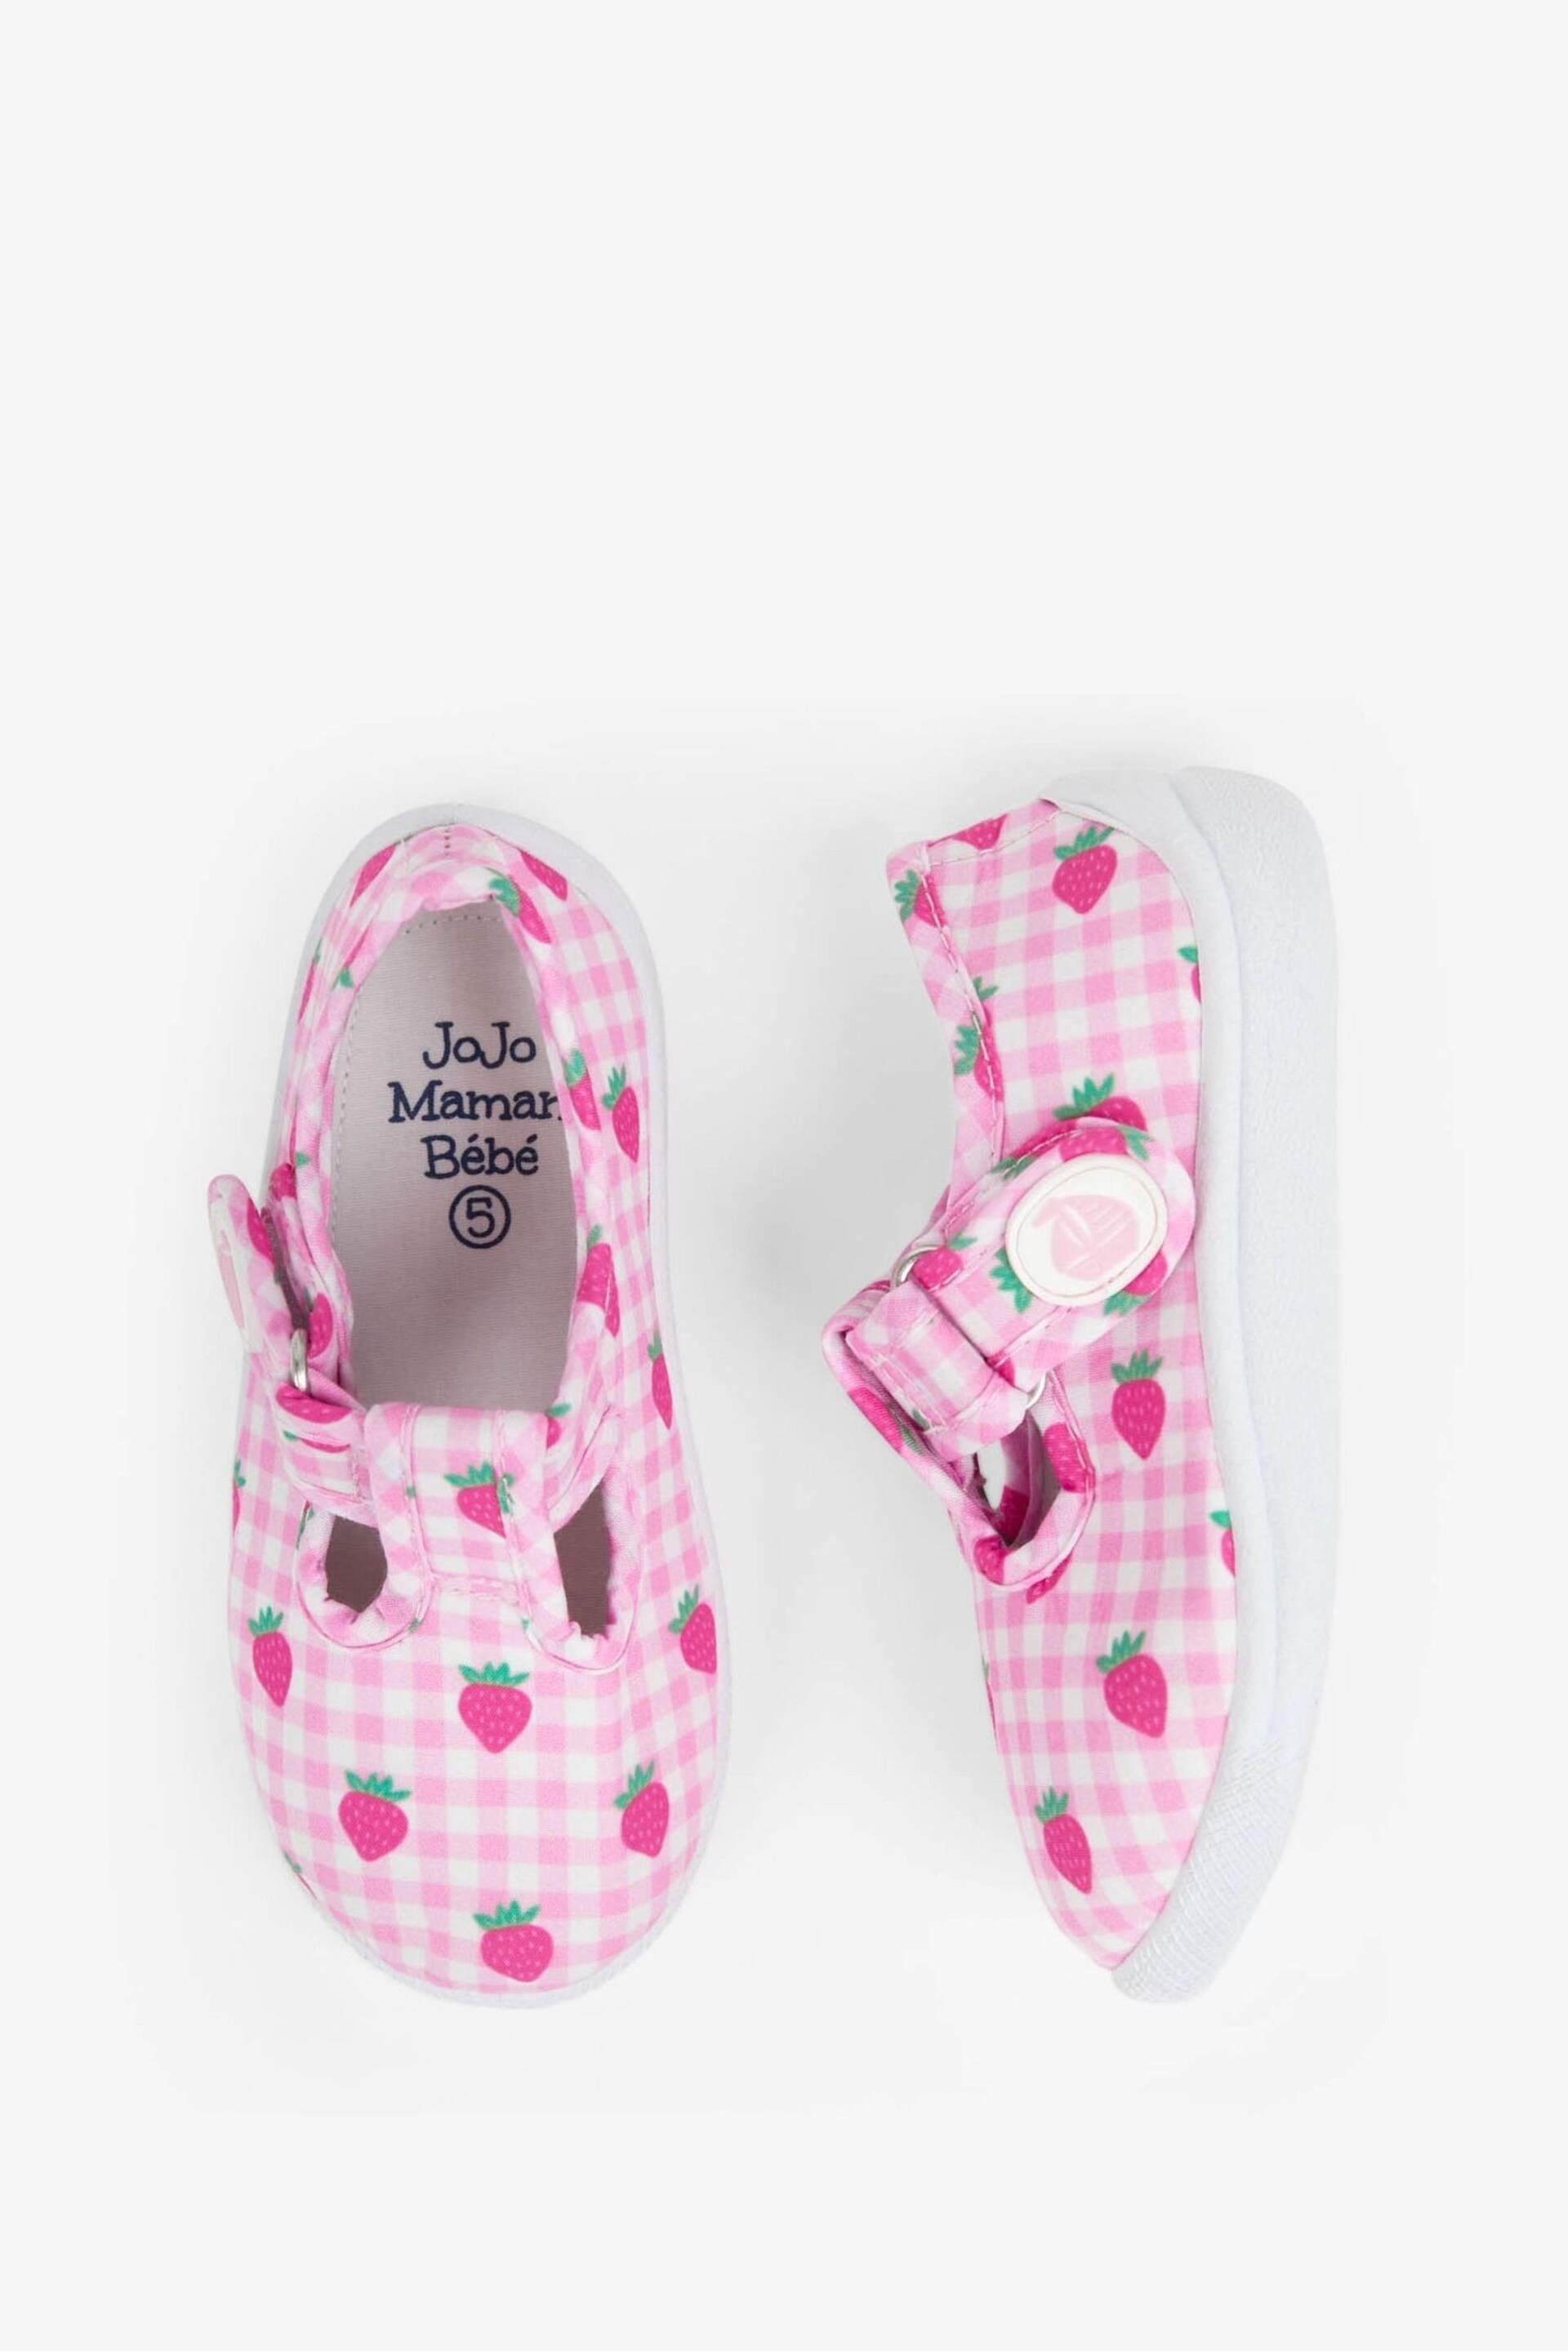 JoJo Maman Bébé Pink Girls' Strawberry Canvas Summer Shoes - Image 3 of 3